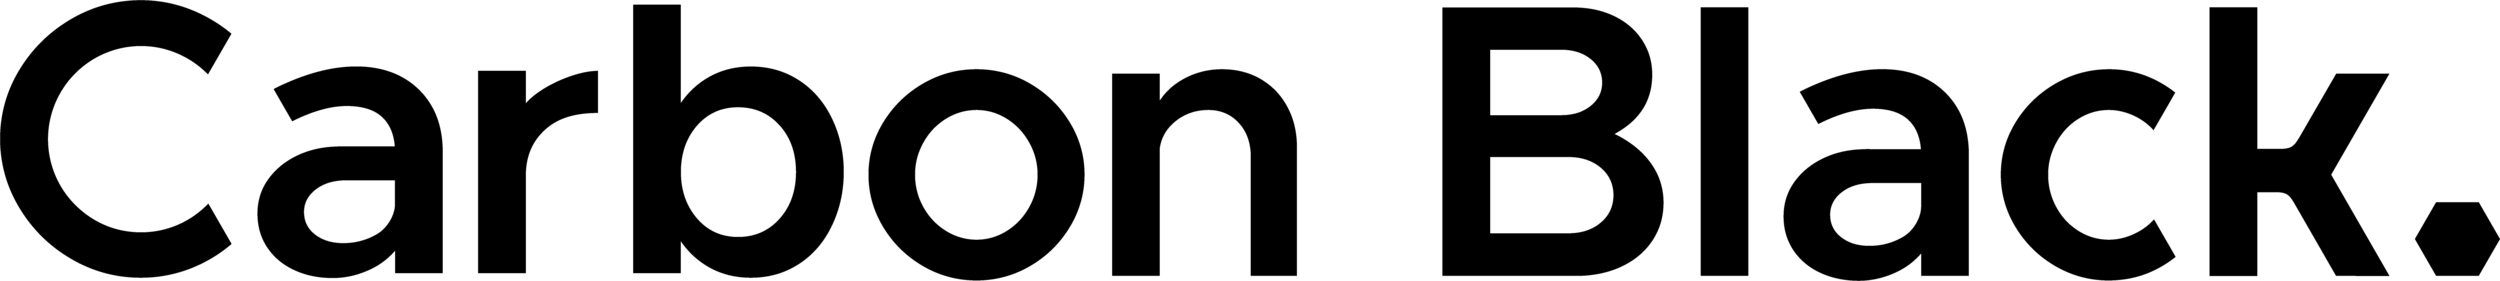 carbon black logo.png